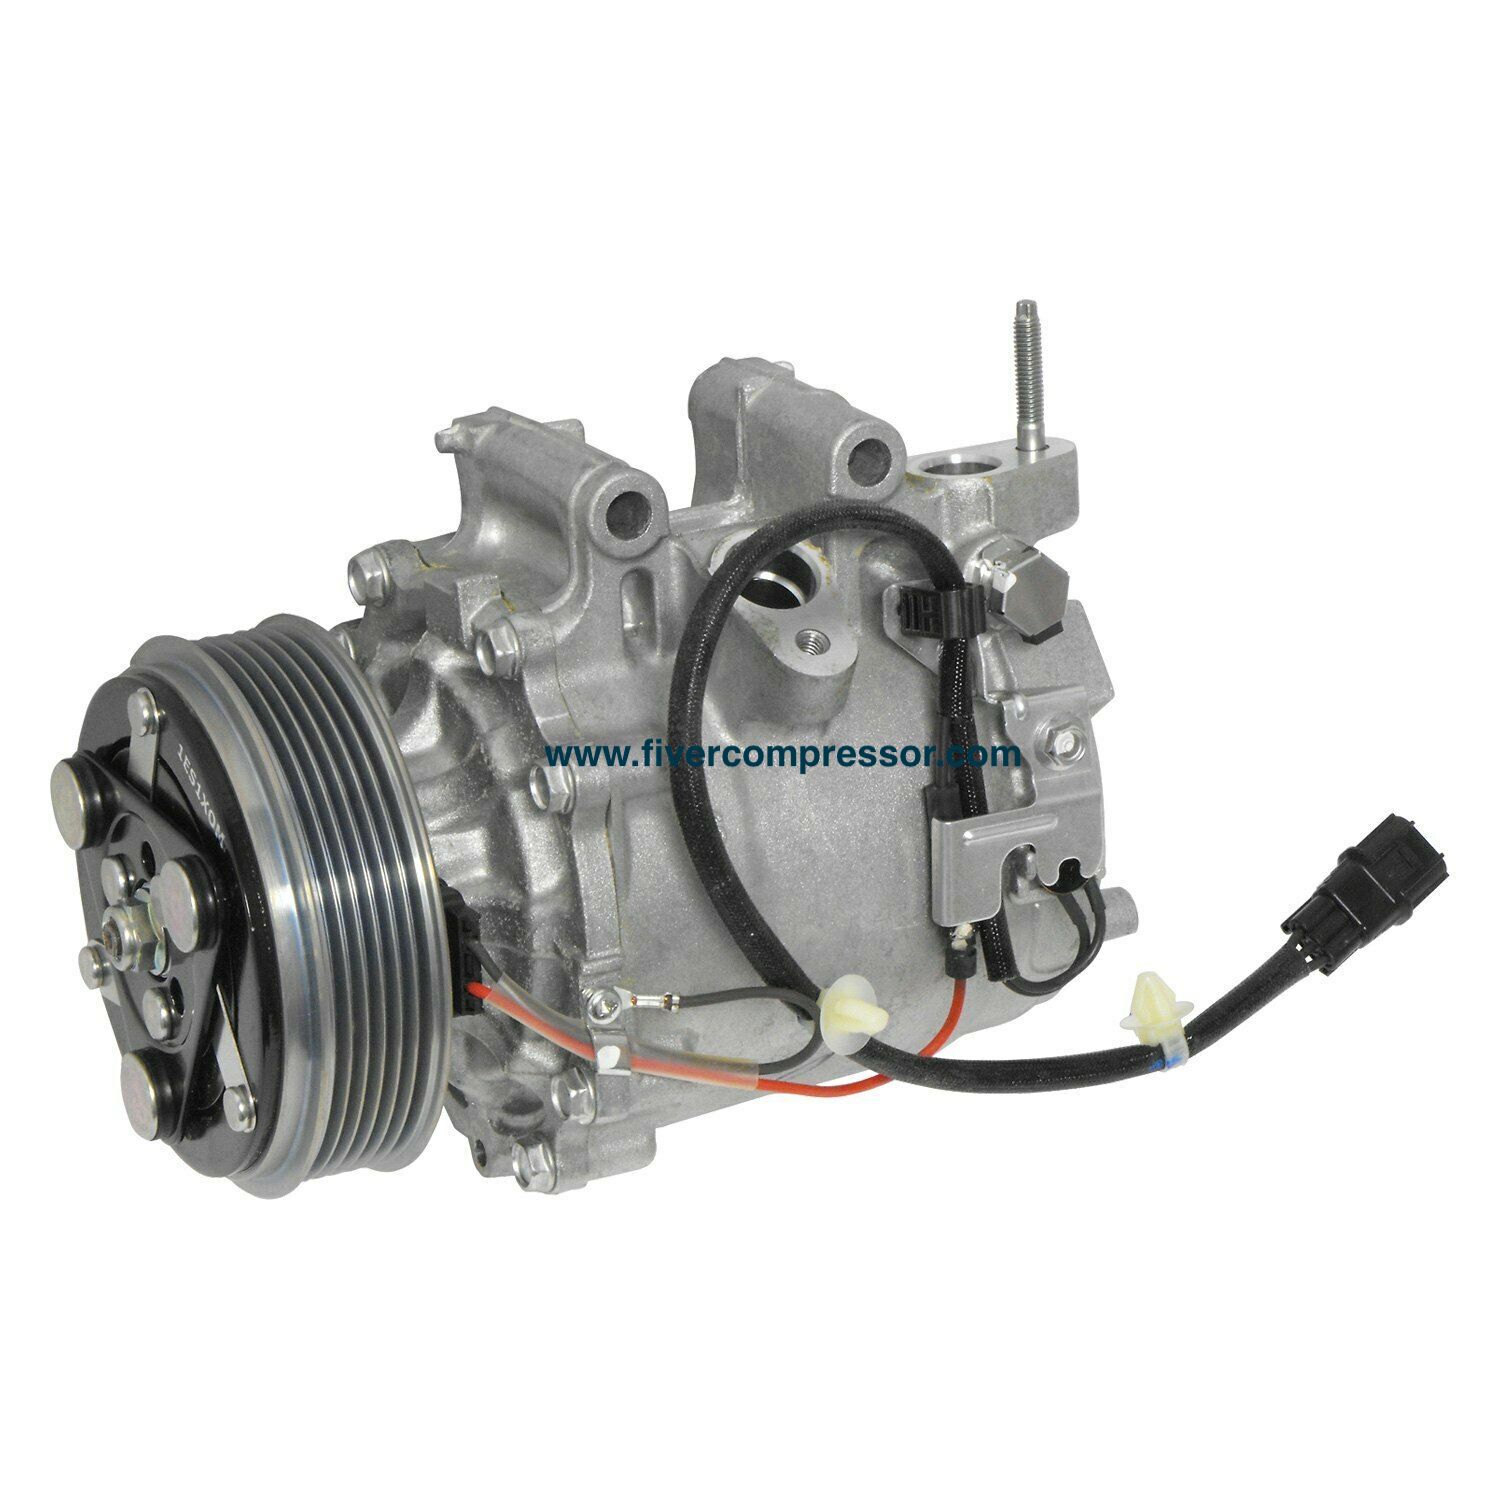 Honda Civic 1.8L 2012-2015 A/C Compressor Replacement; AC Compressor for Acura ILX 2.0L 2013-2016; Auto A/C compressor manufacturer